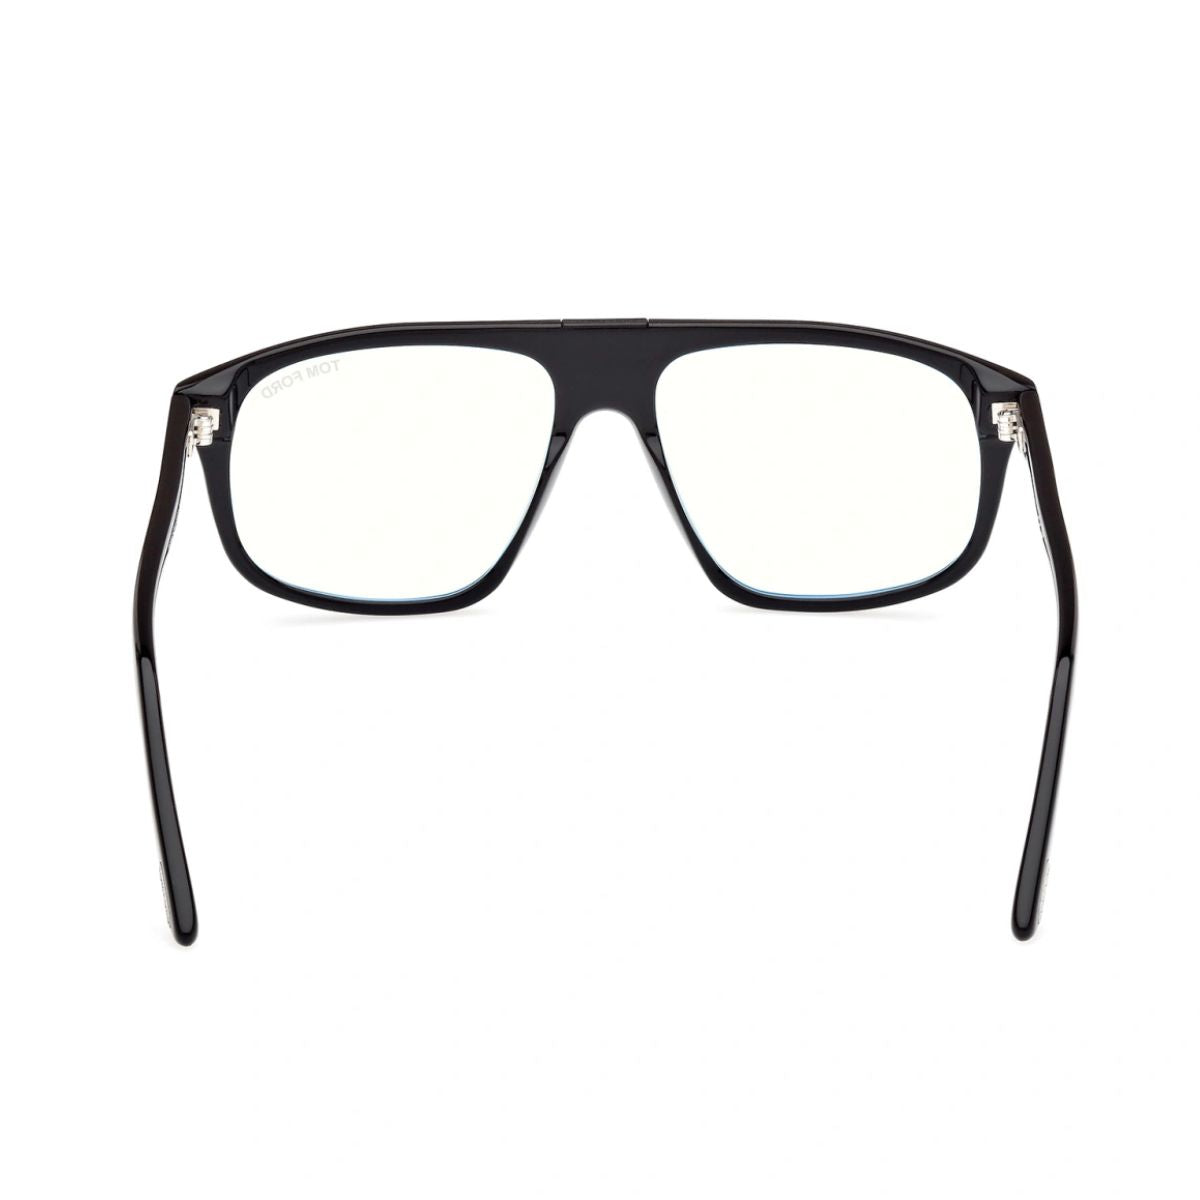 "Stylish Black Square Anti Reflection Eyeglasses For Men's At Optorium"